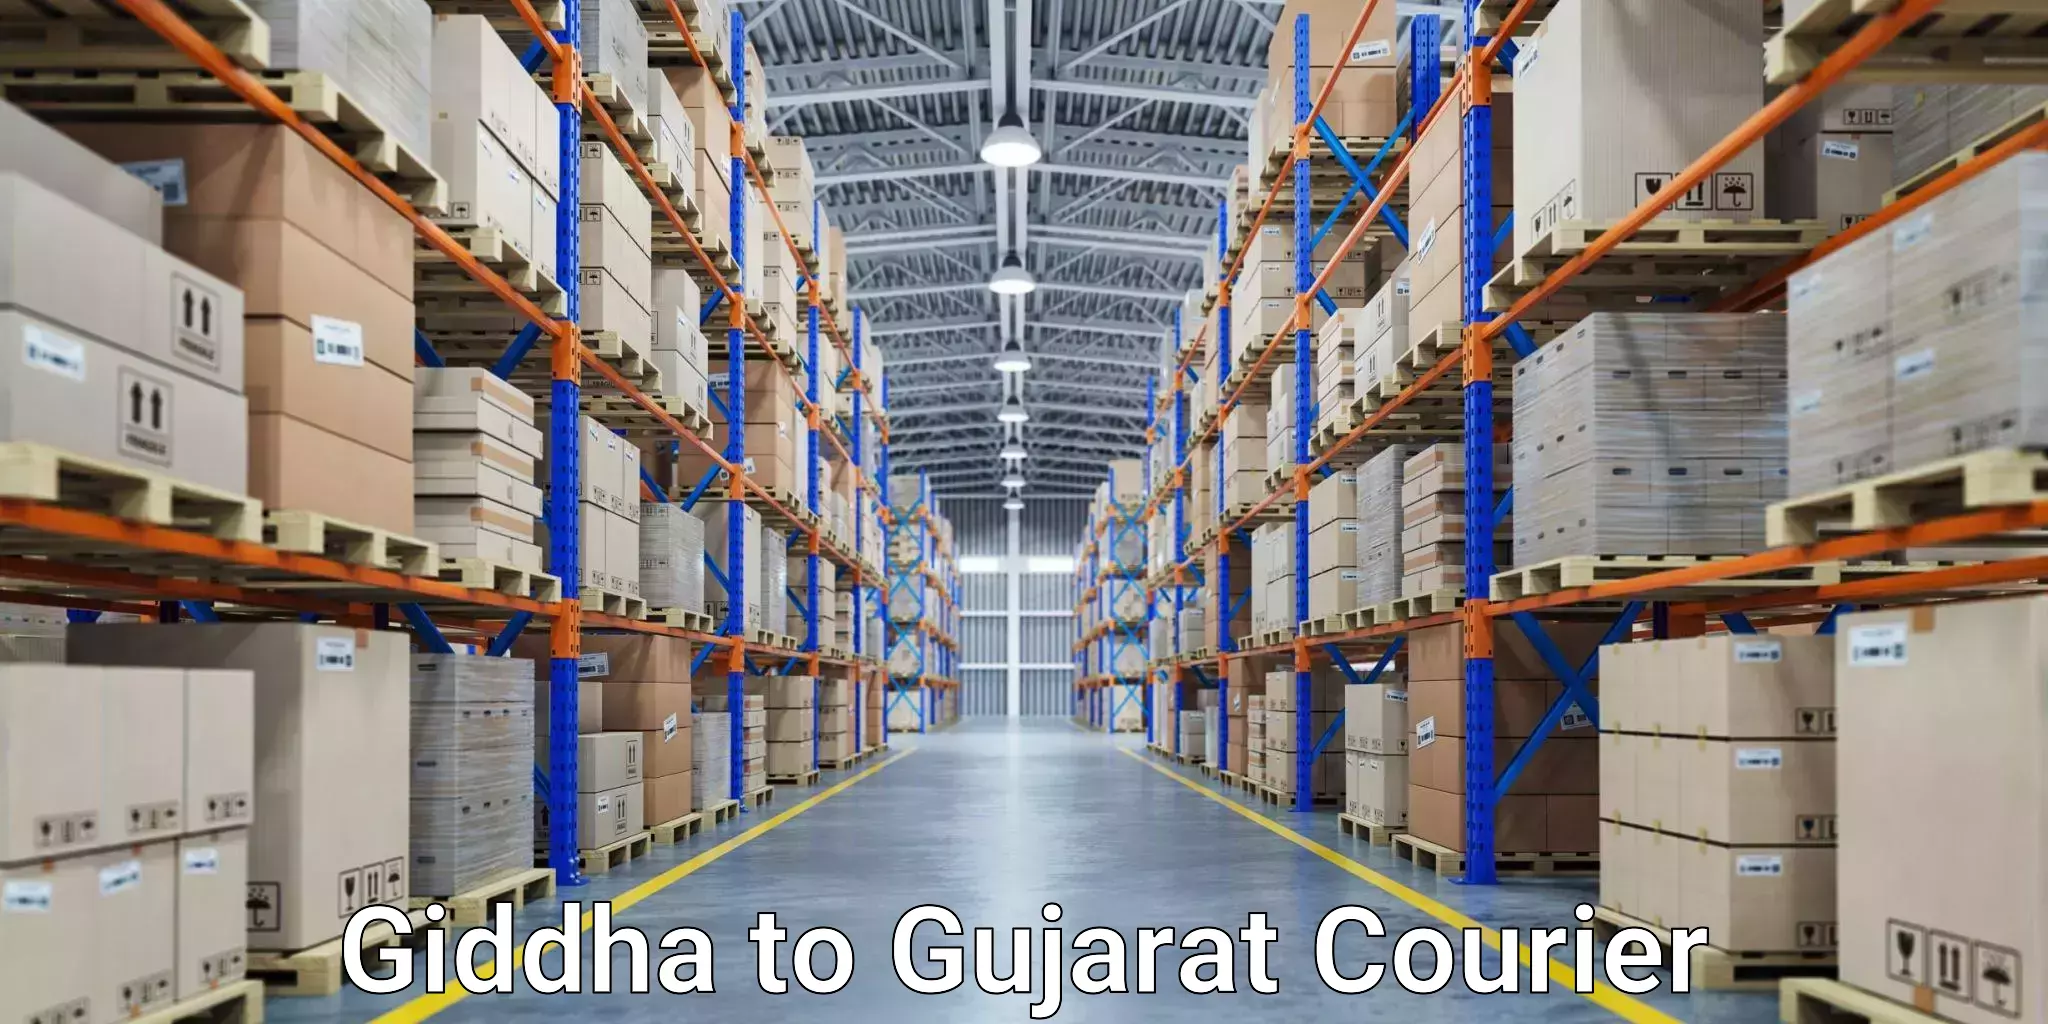 Comprehensive delivery network Giddha to Vatadara